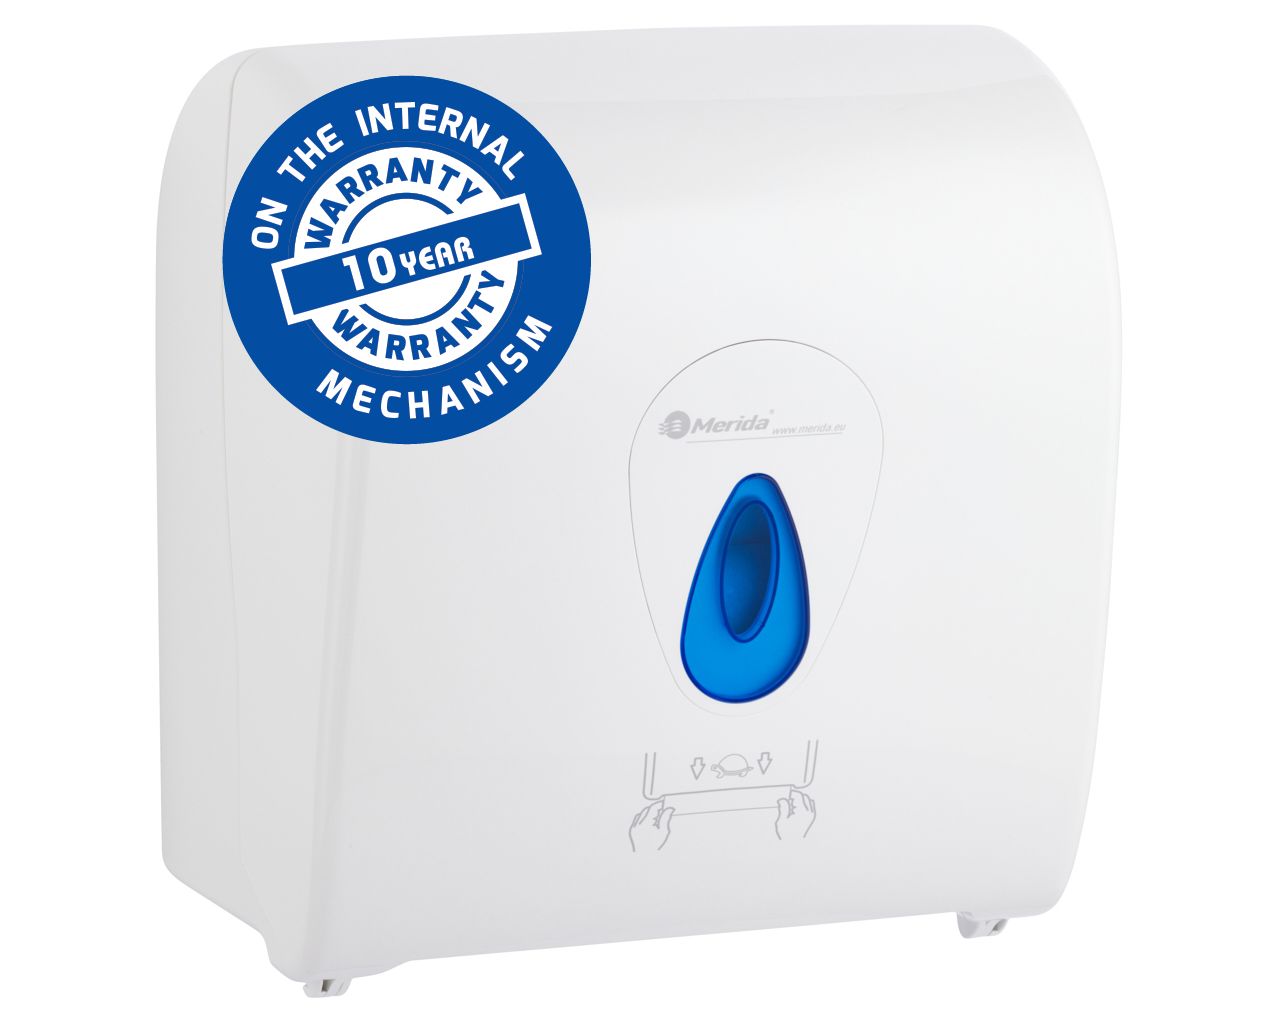 MERIDA TOP manual paper towel dispenser in rolls, maxi, blue window